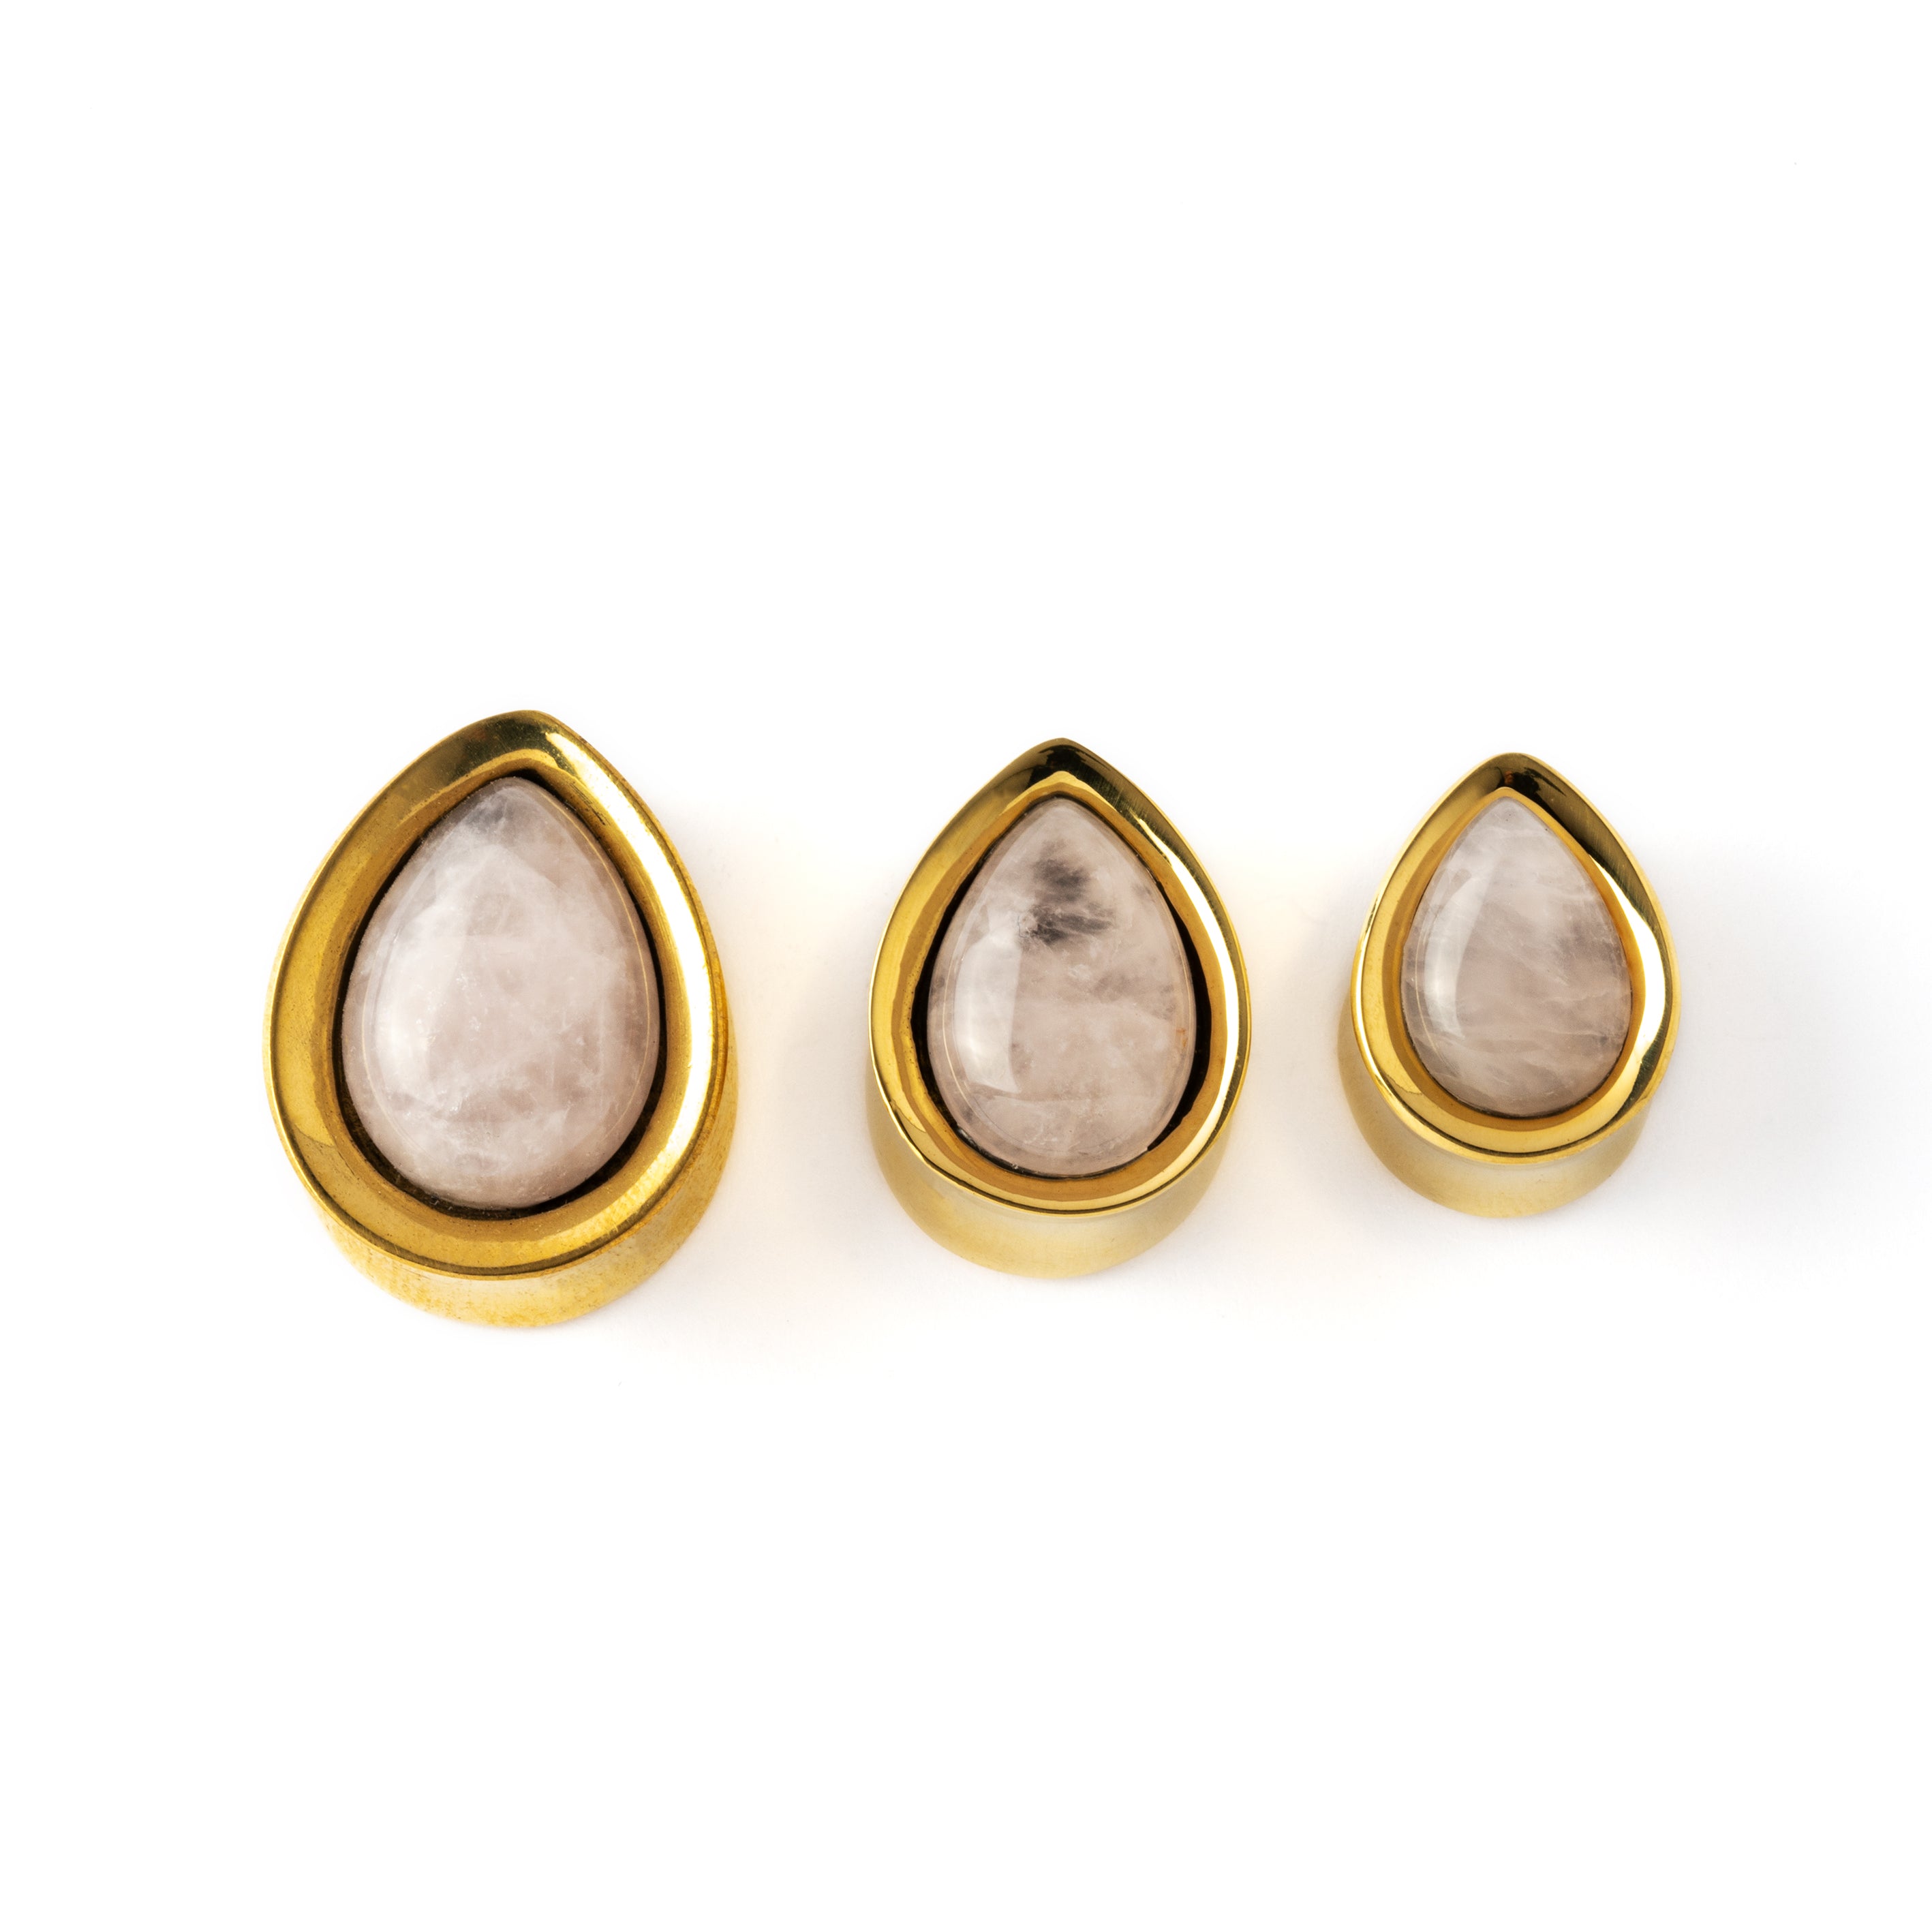 several sizes of Golden brass teardrop rose quartz ear plugs front view